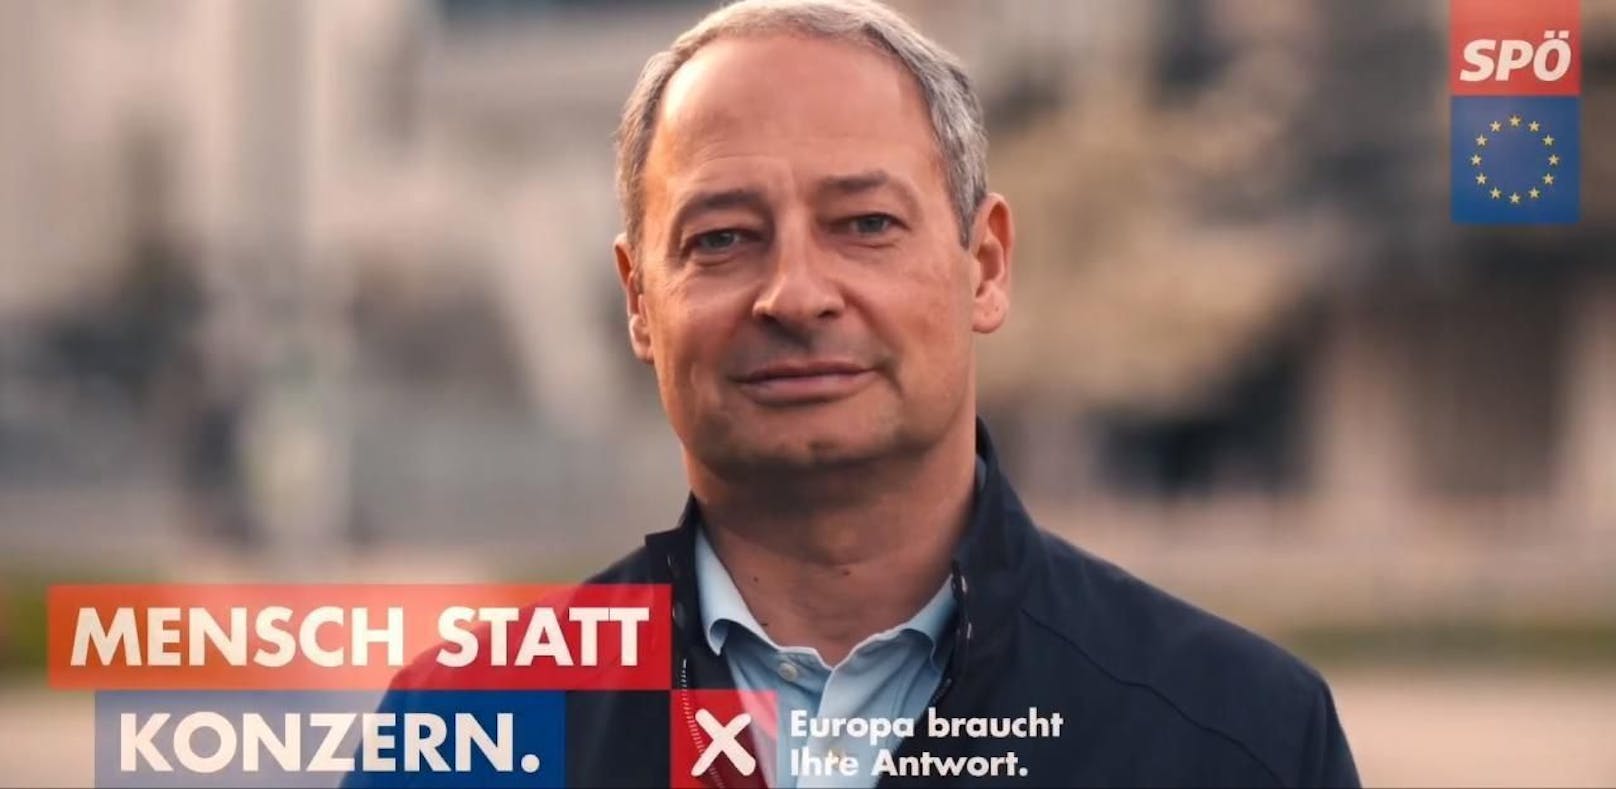 SPÖ eröffnet am Samstag EU-Wahlkampf